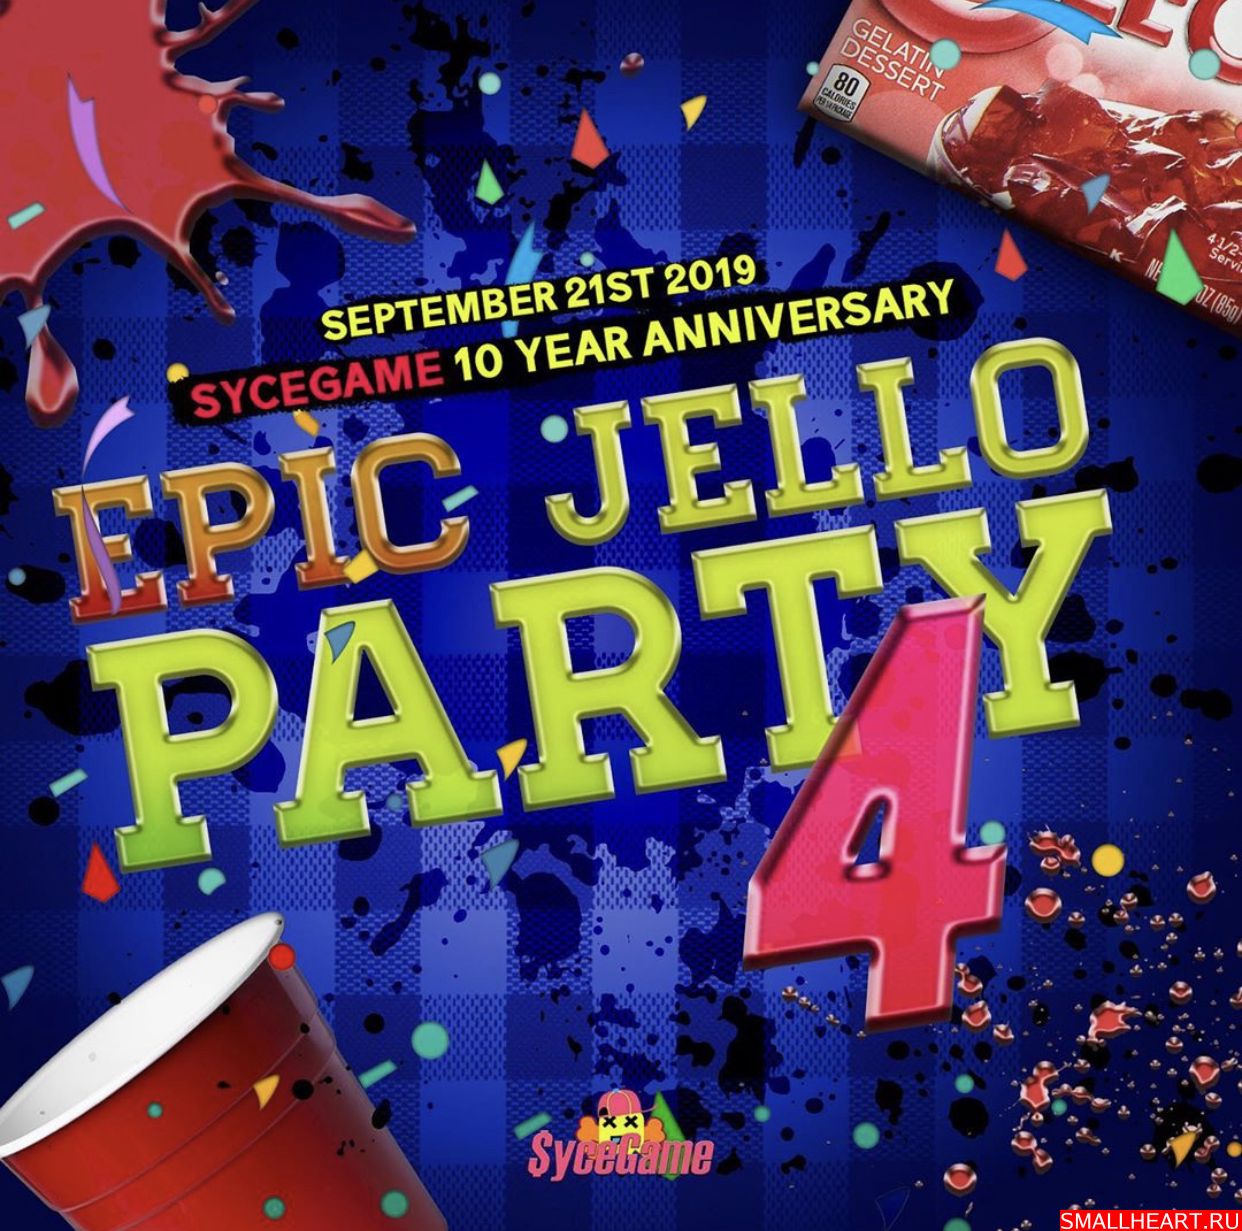 Epic Jello Party 4: SyceGame 10 Year Anniversary Celebration.